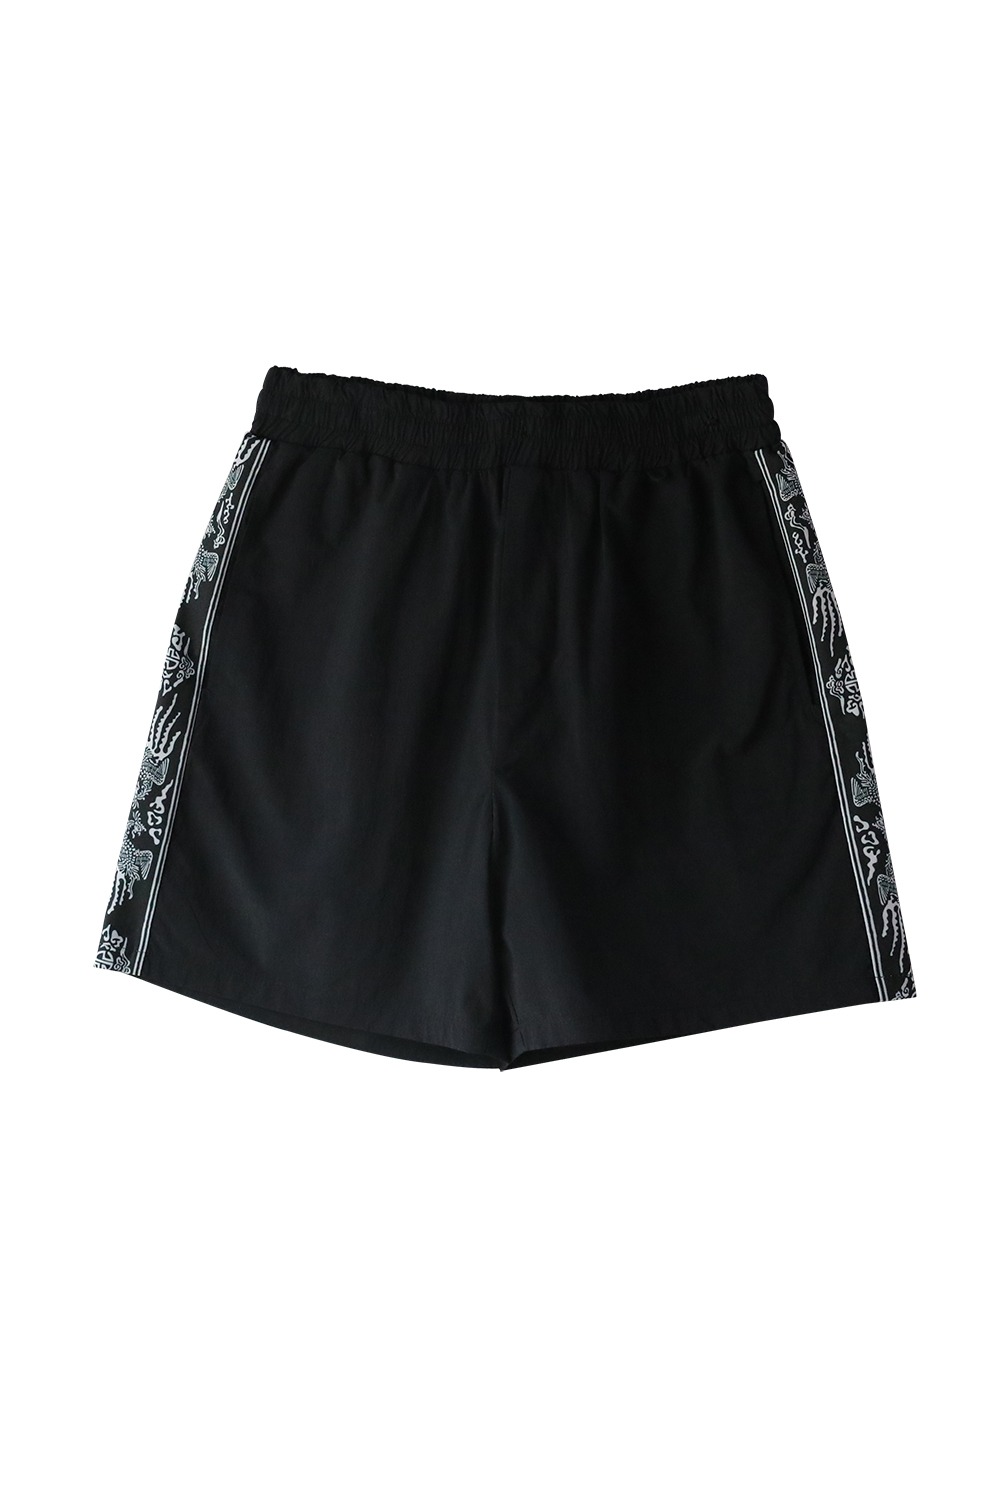 Phoenix Trackpants Shorts [Black]